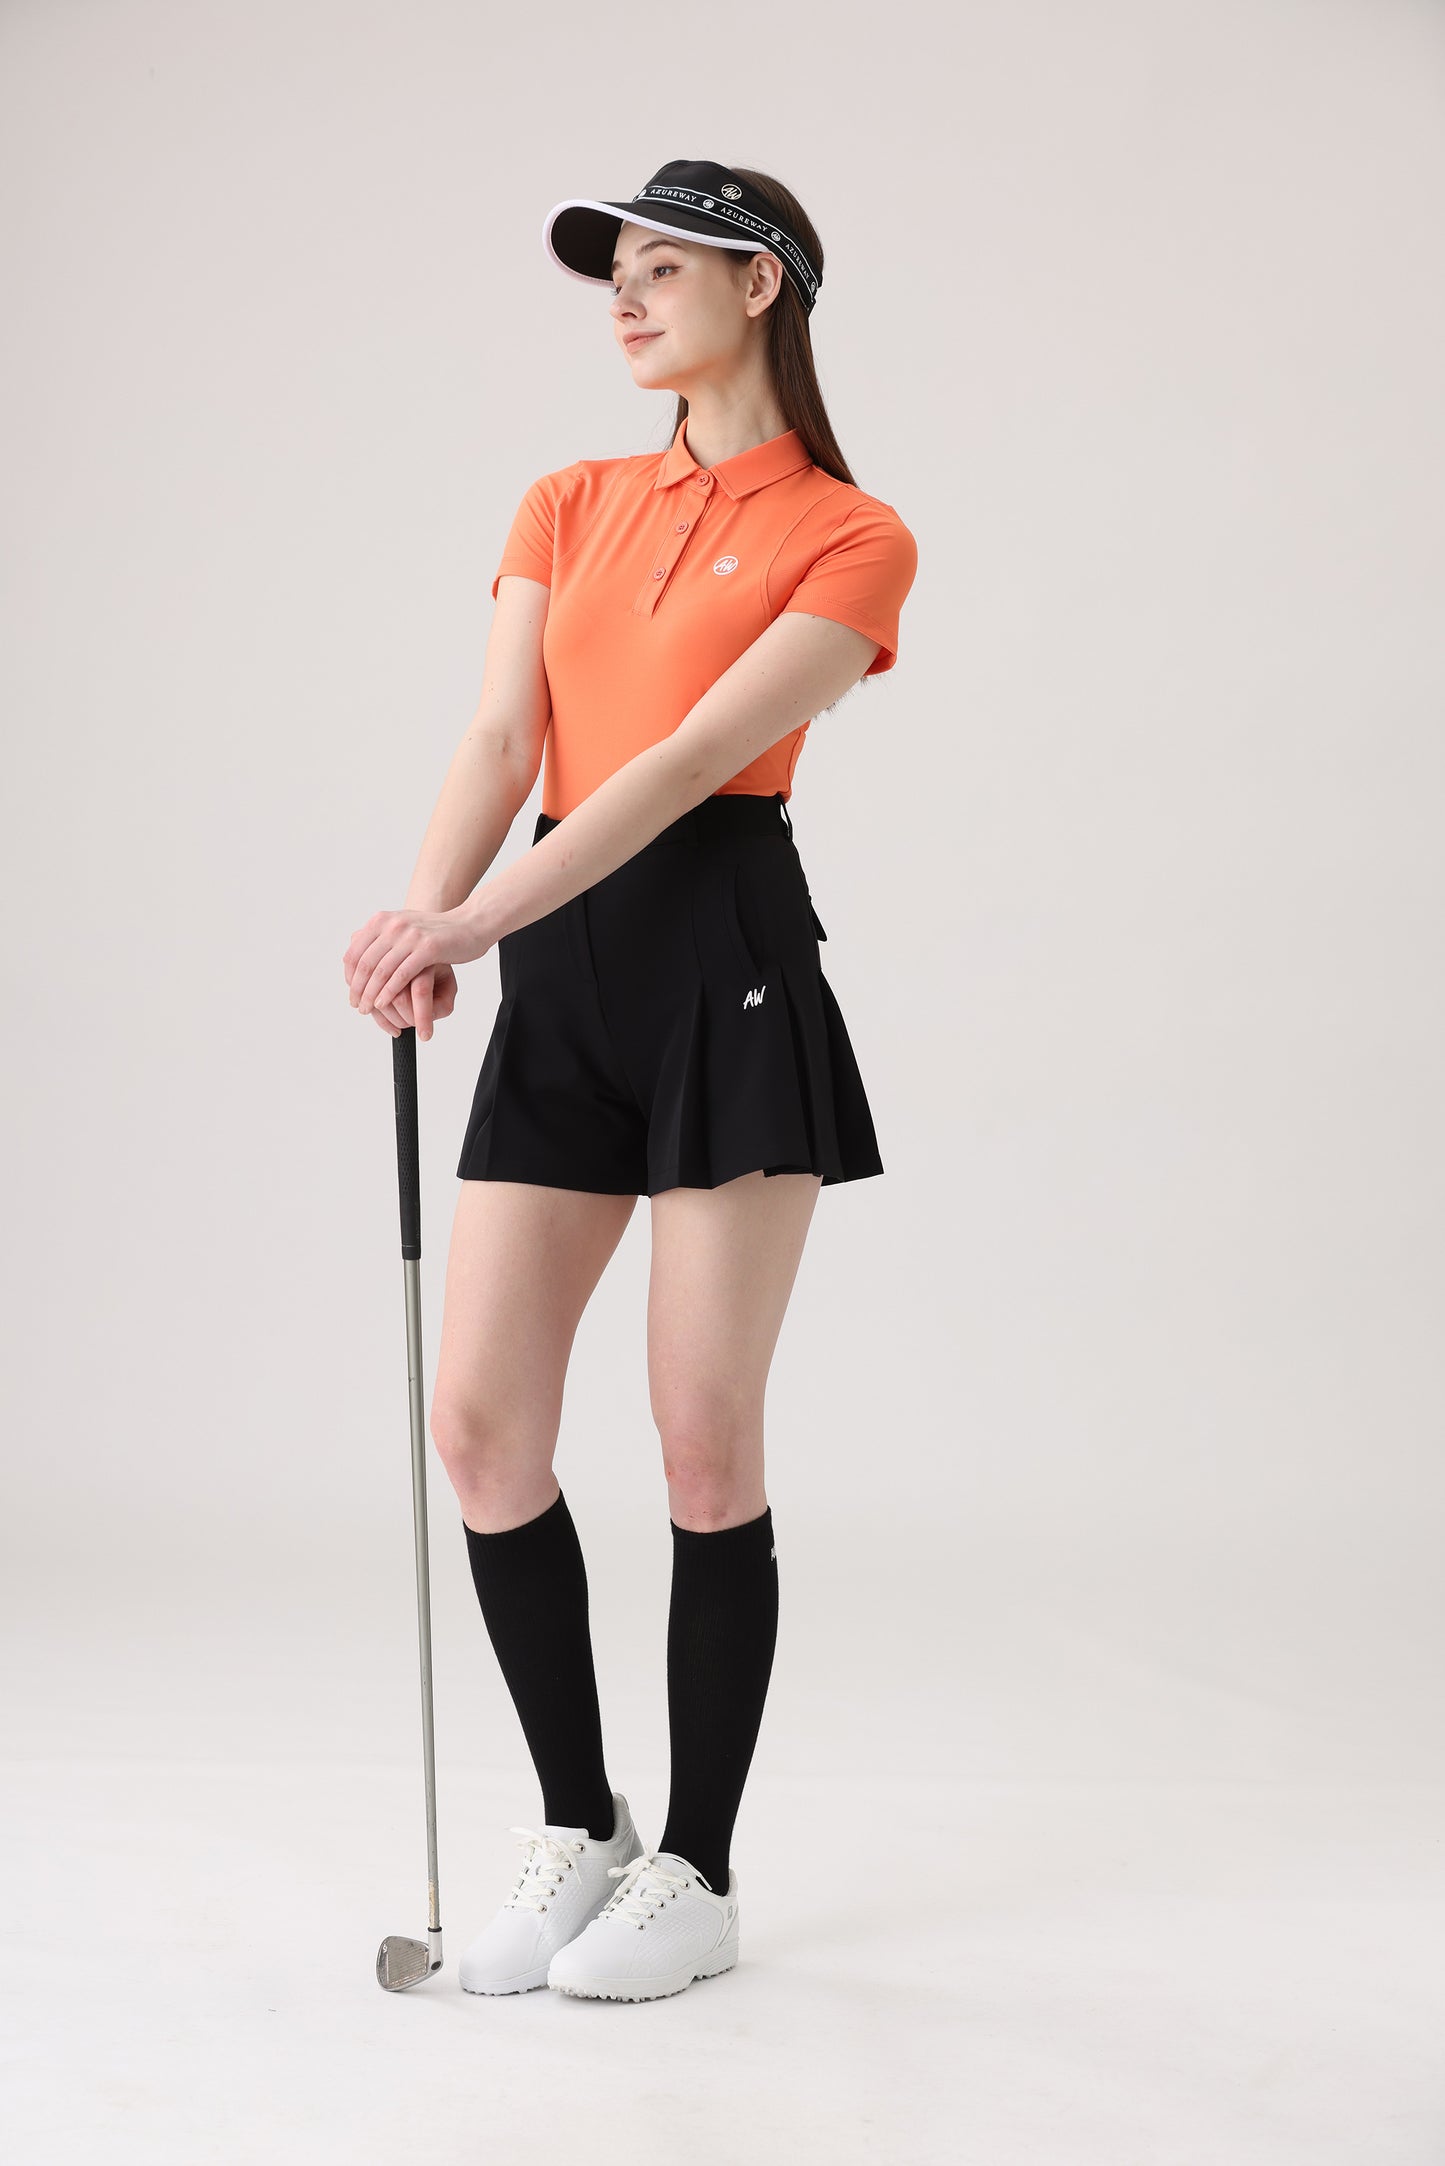 Azureway Summer Golf Ladies Shirt AW-T4105